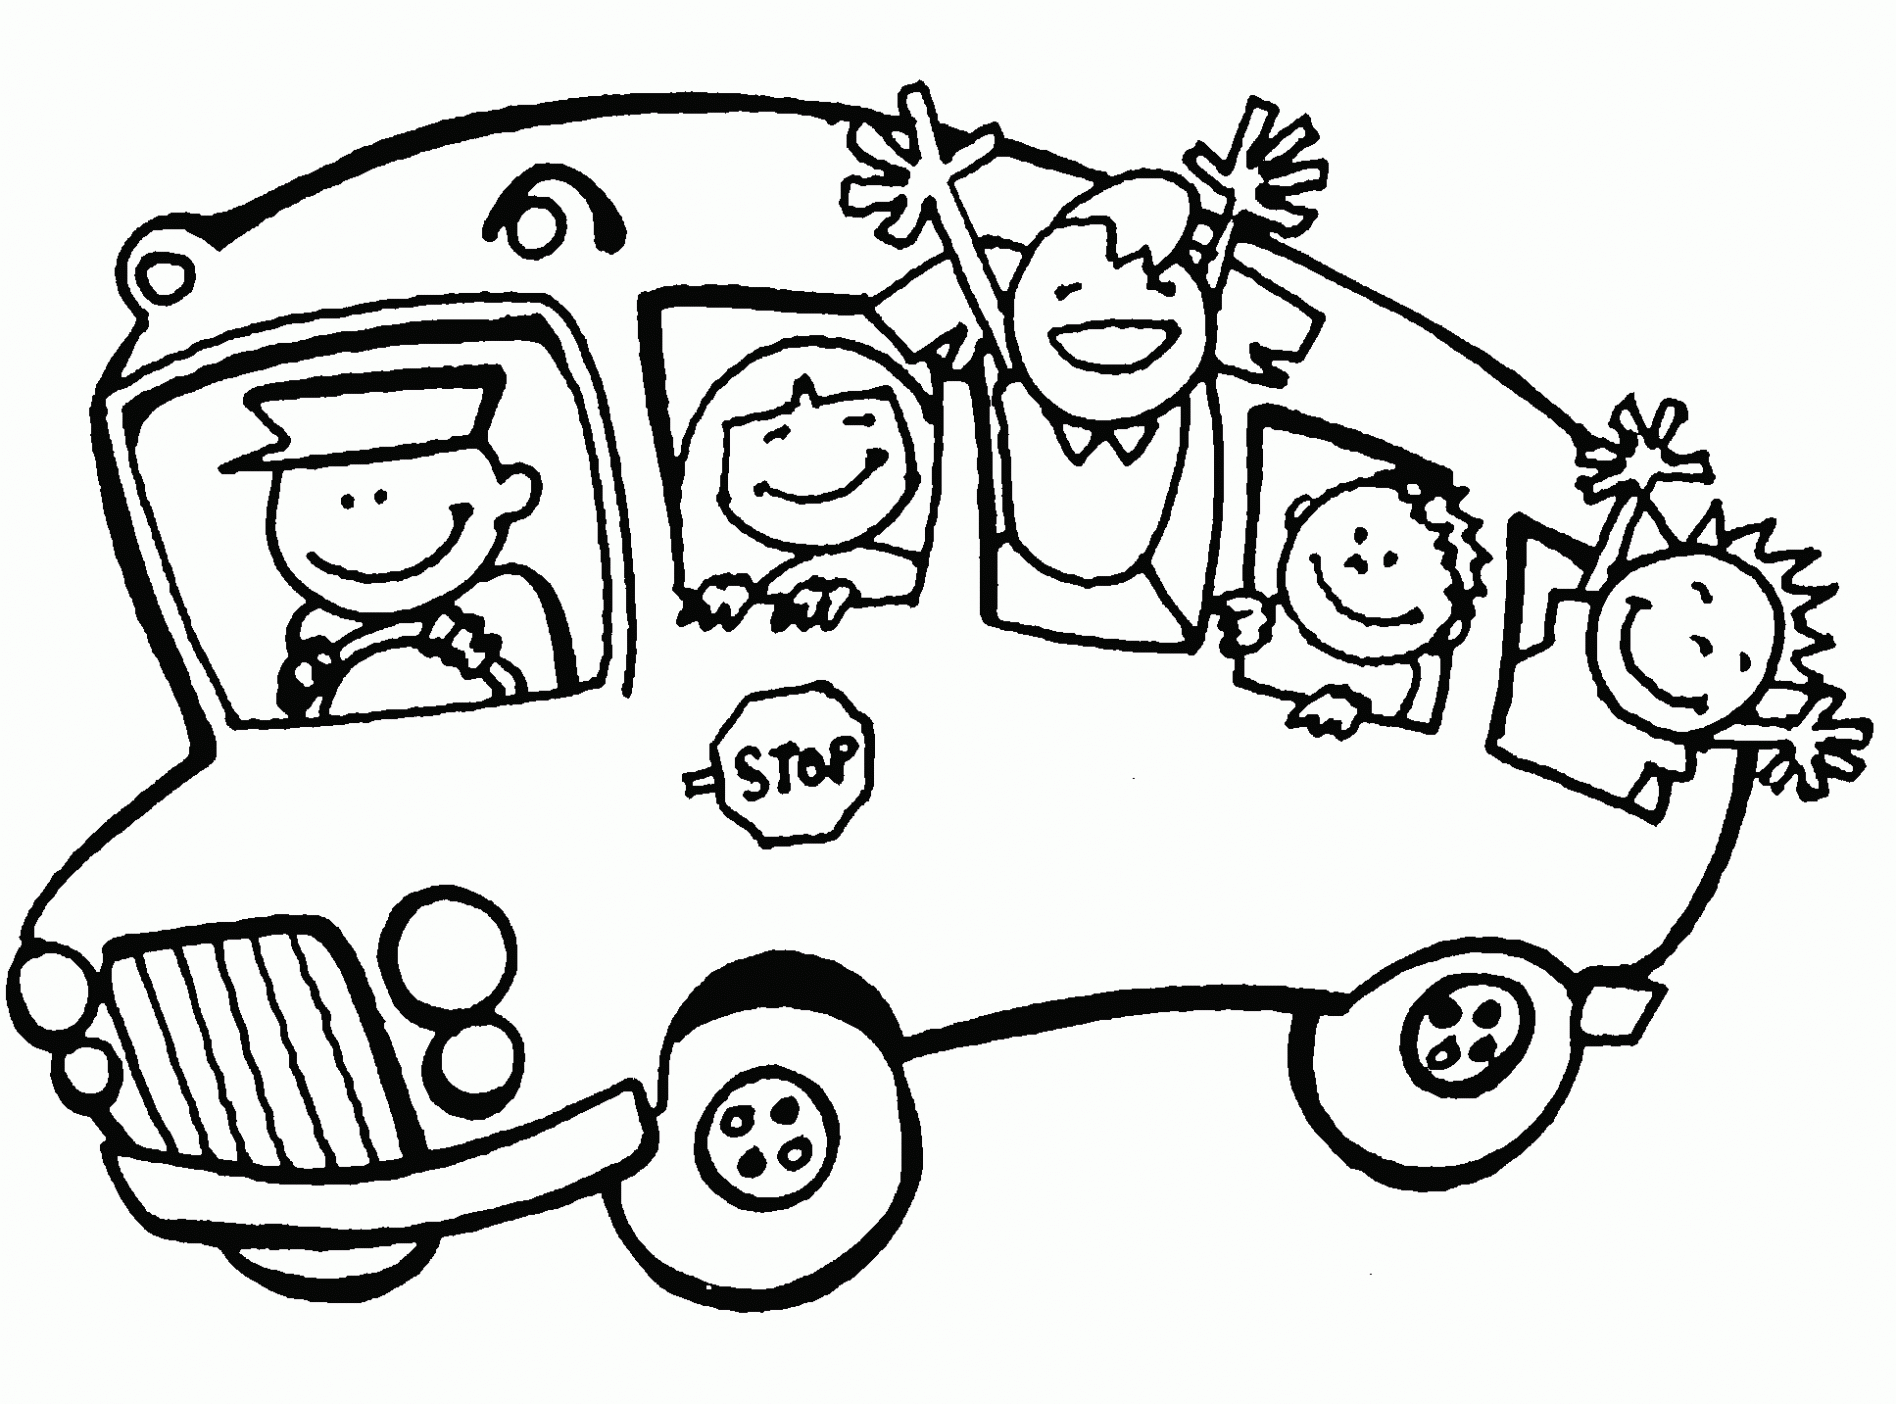 Bus Drawing